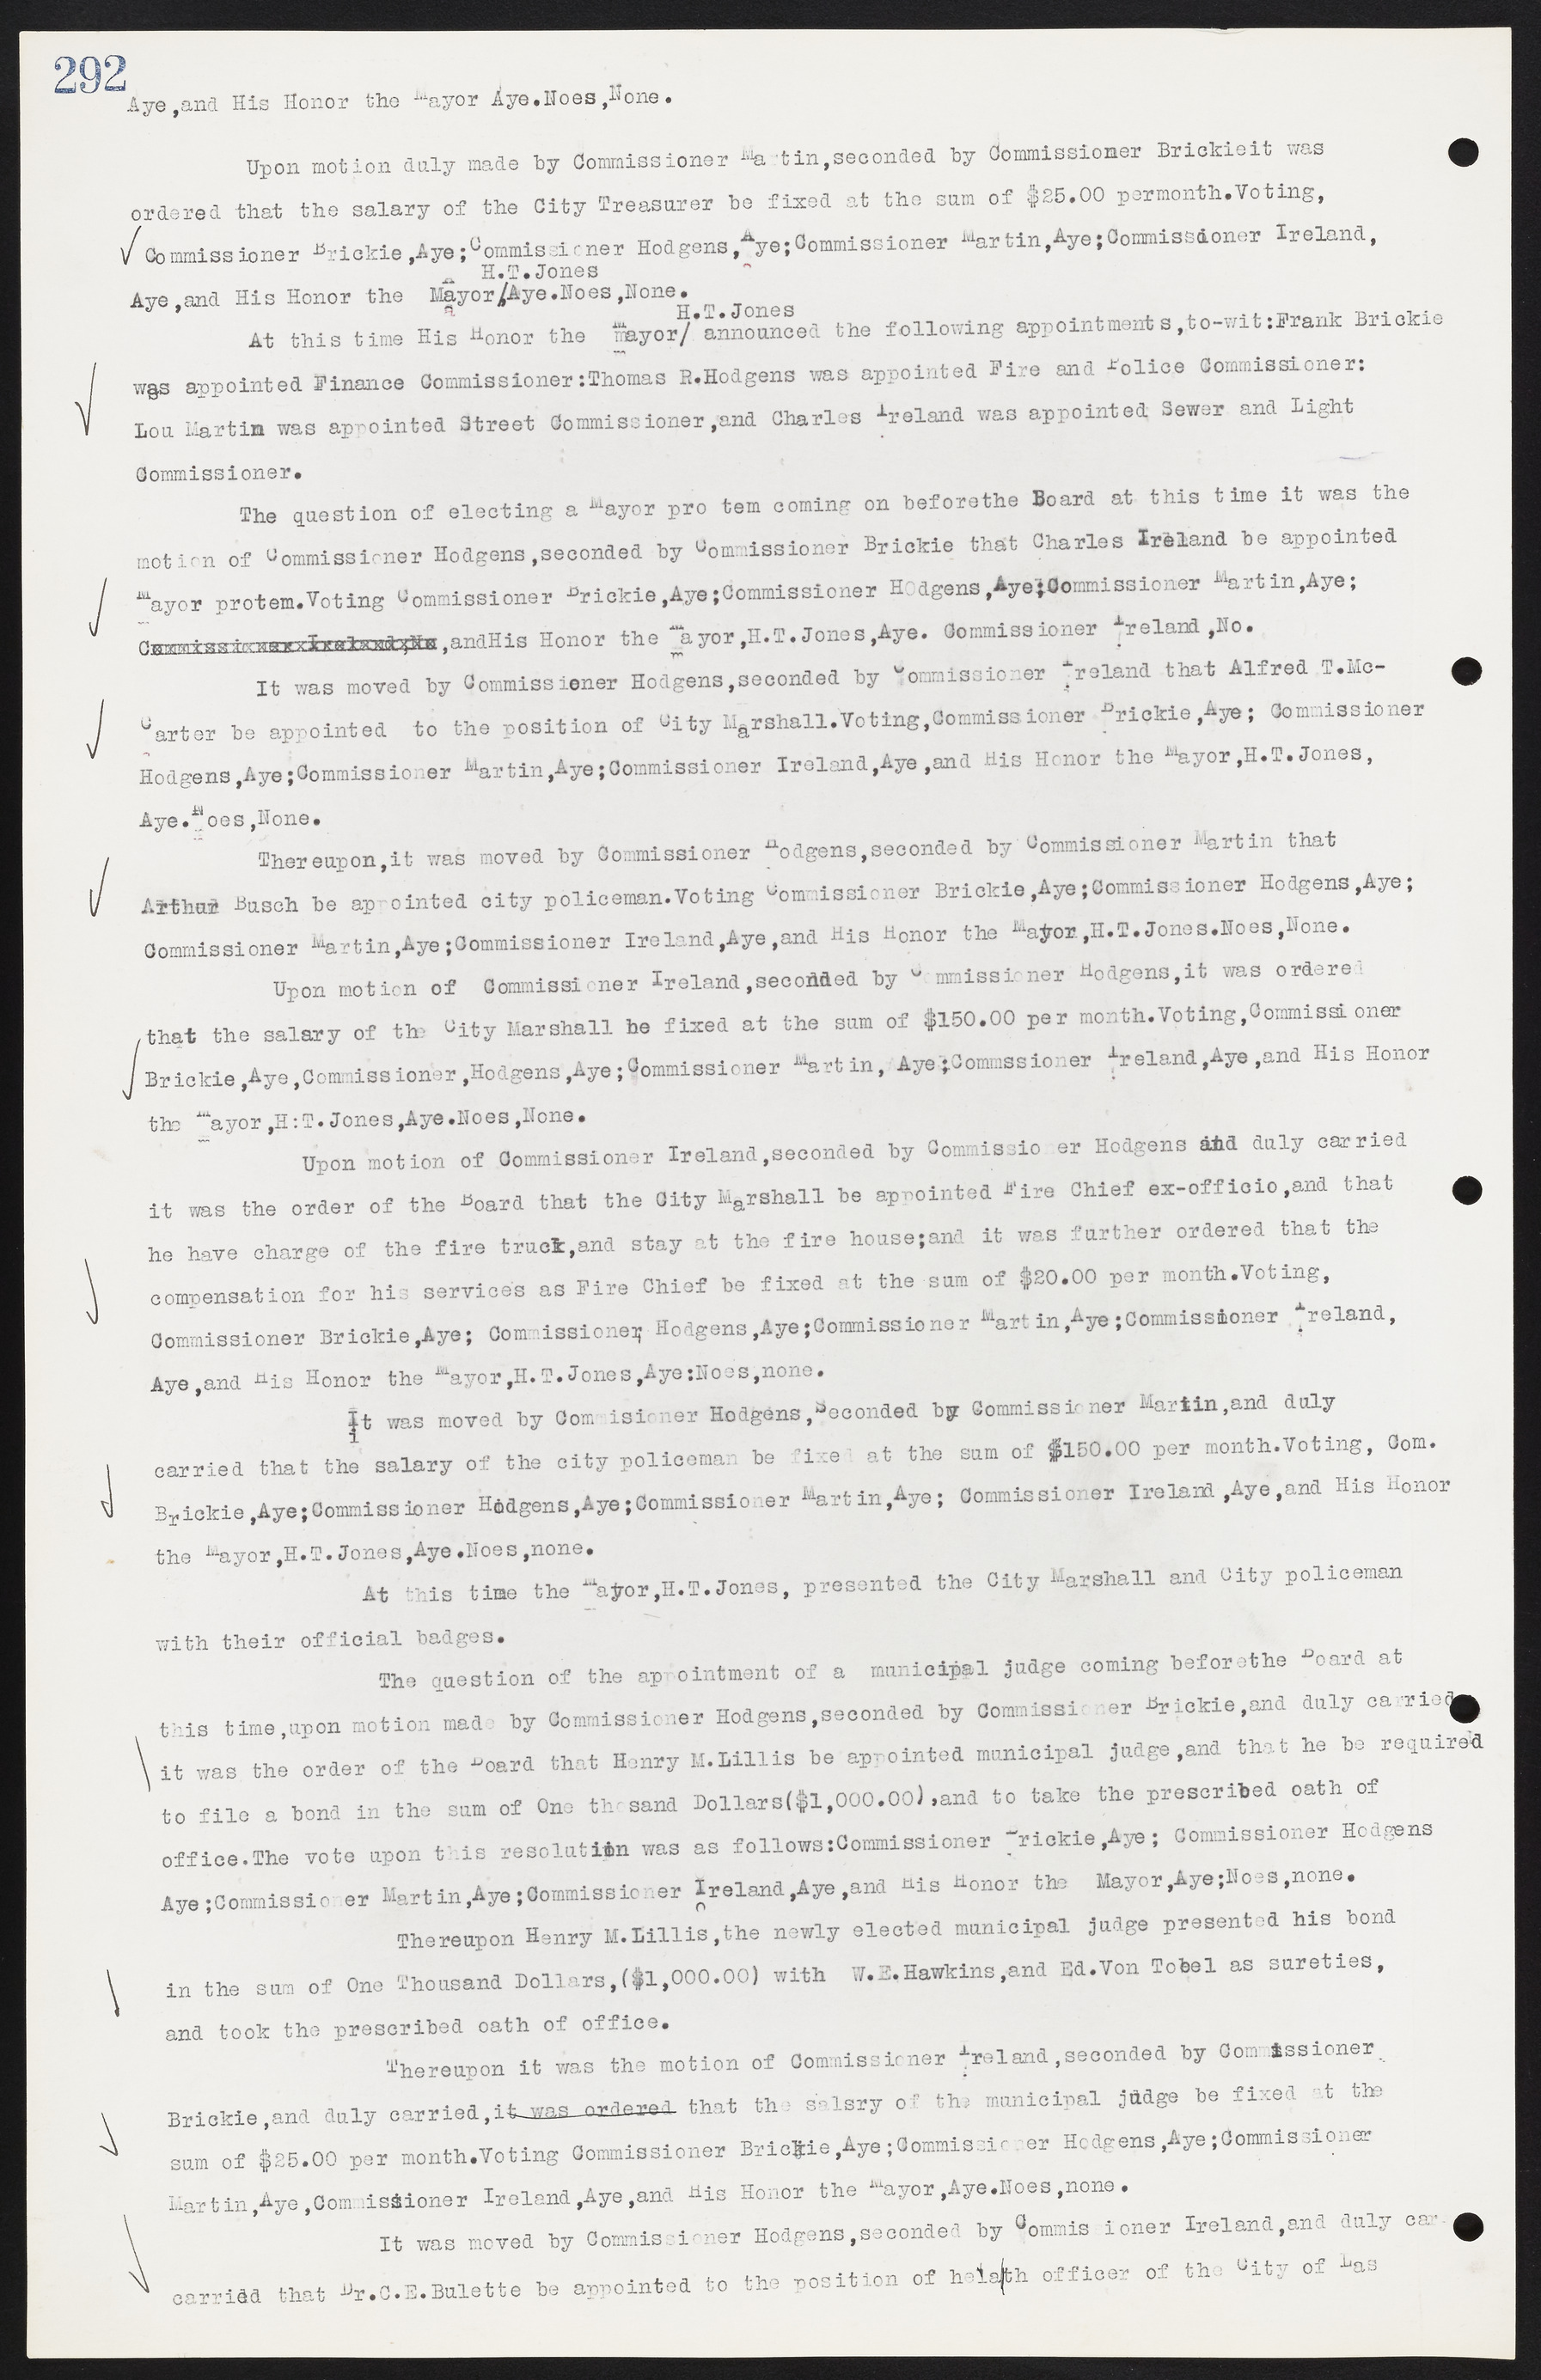 Las Vegas City Commission Minutes, June 22, 1911 to February 7, 1922, lvc000001-308